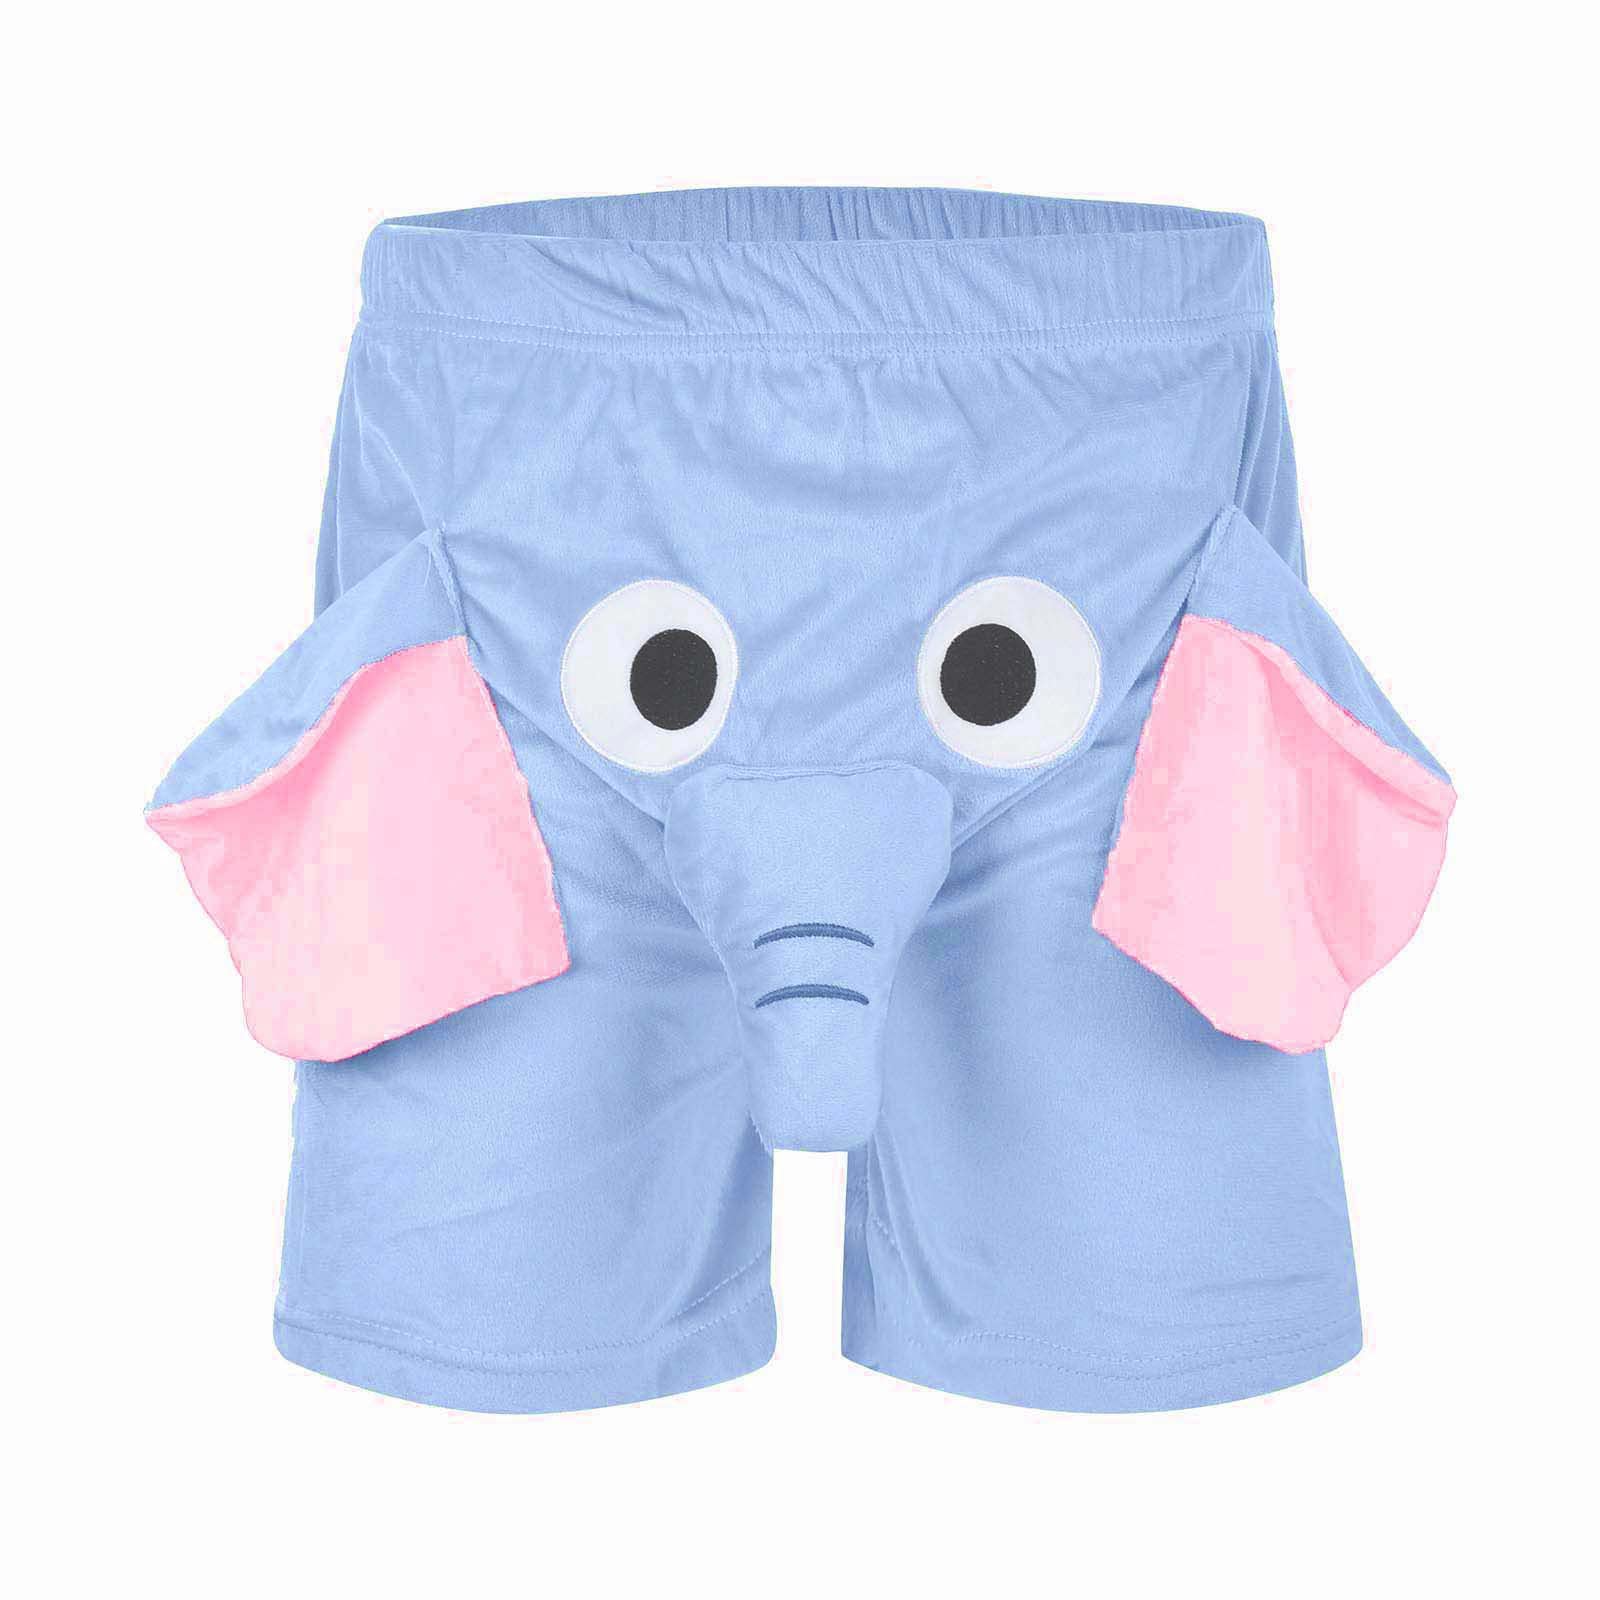 man elephant underwear - Buy man elephant underwear at Best Price in  Malaysia